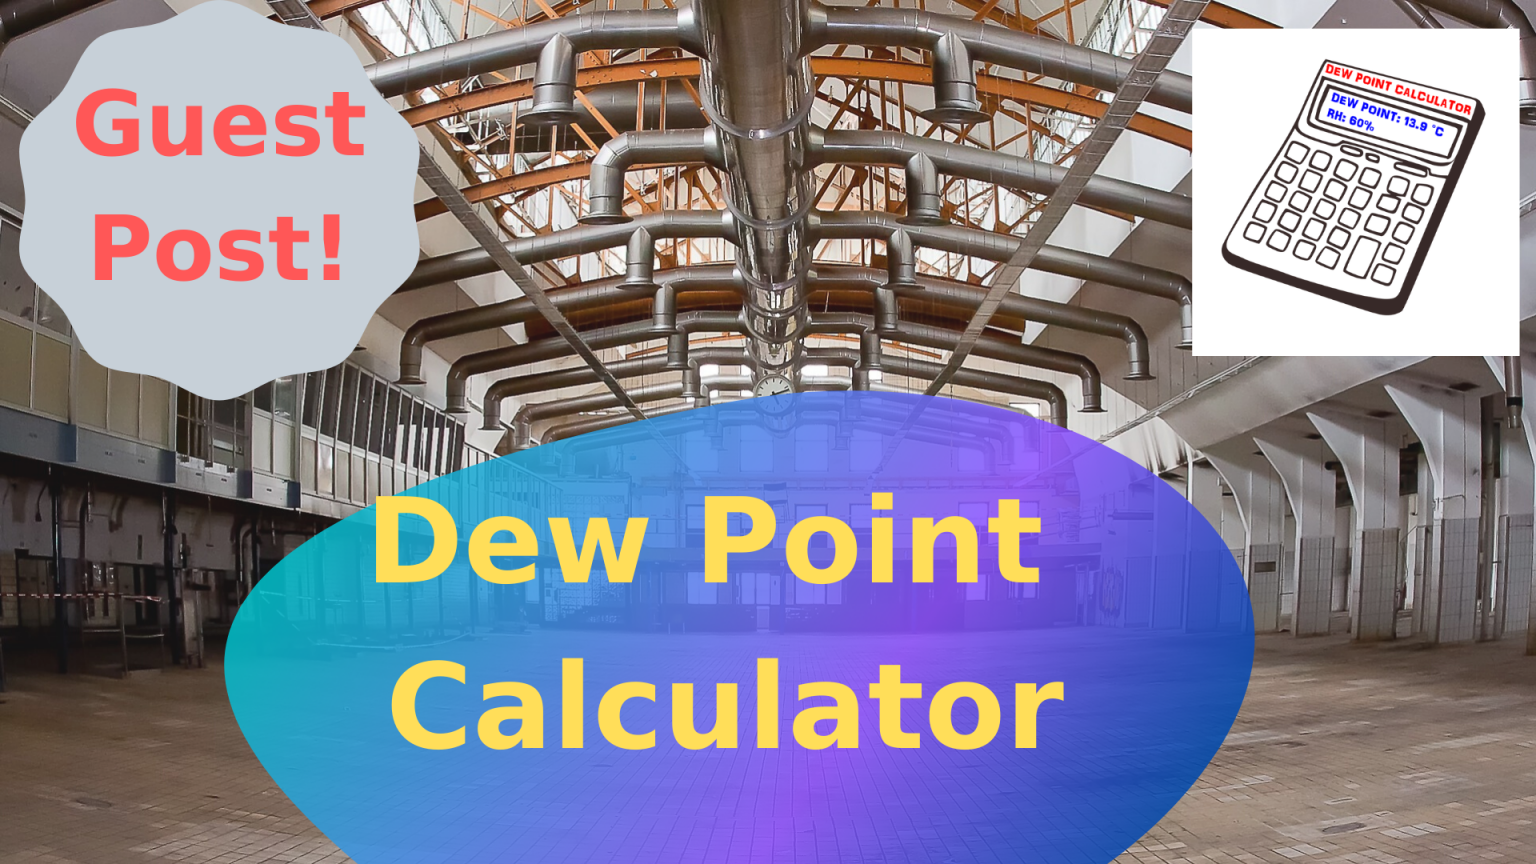 dow dew point calculator